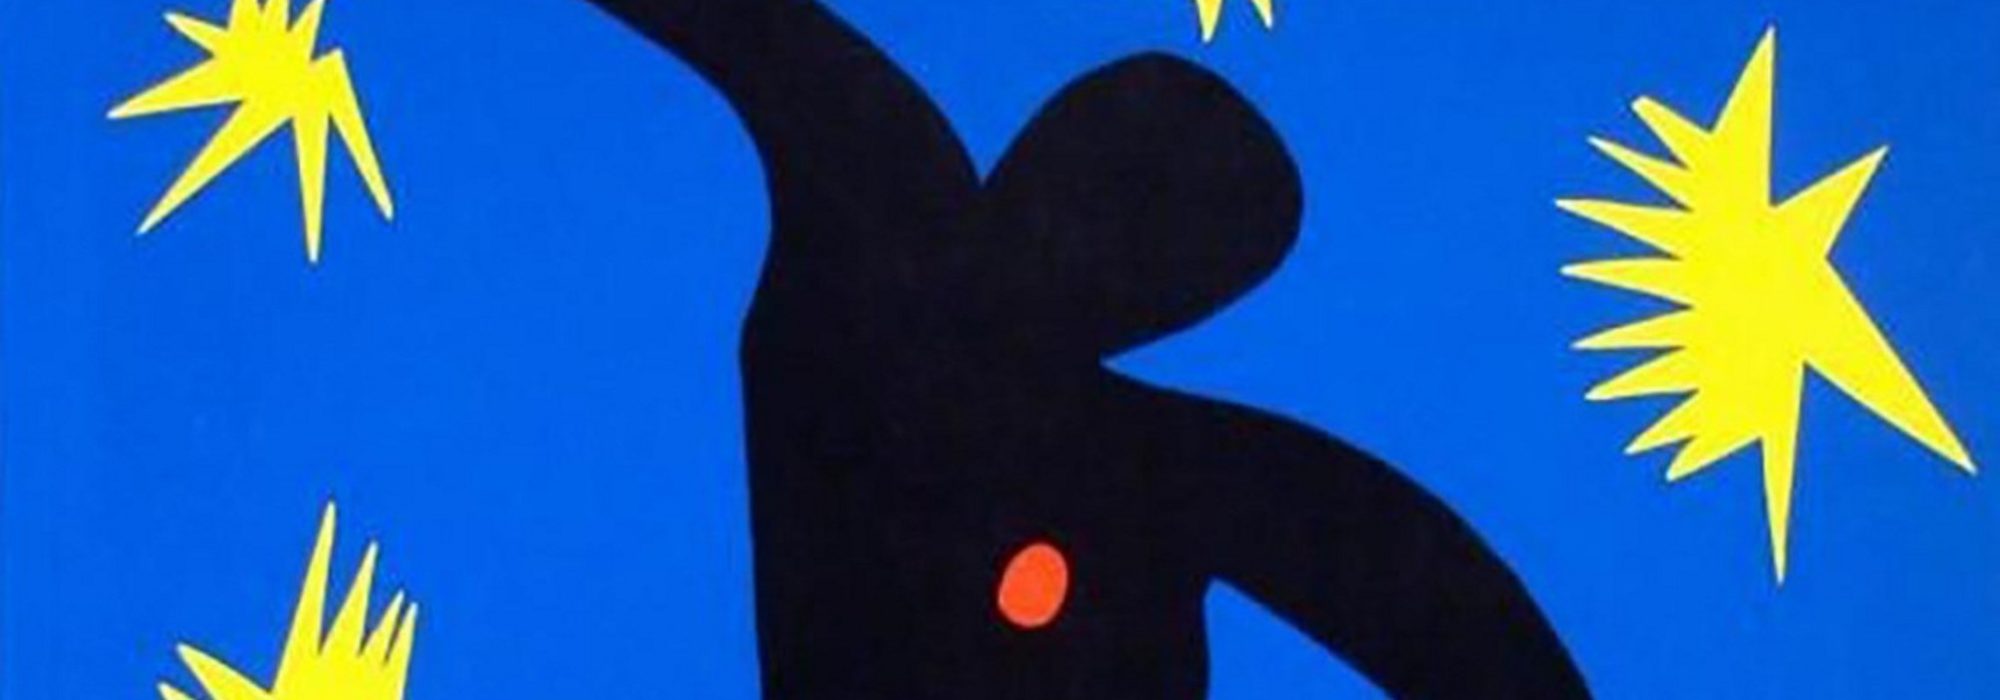 Imagem: Icarus from Jazz (Matisse, 1947, detalhe)